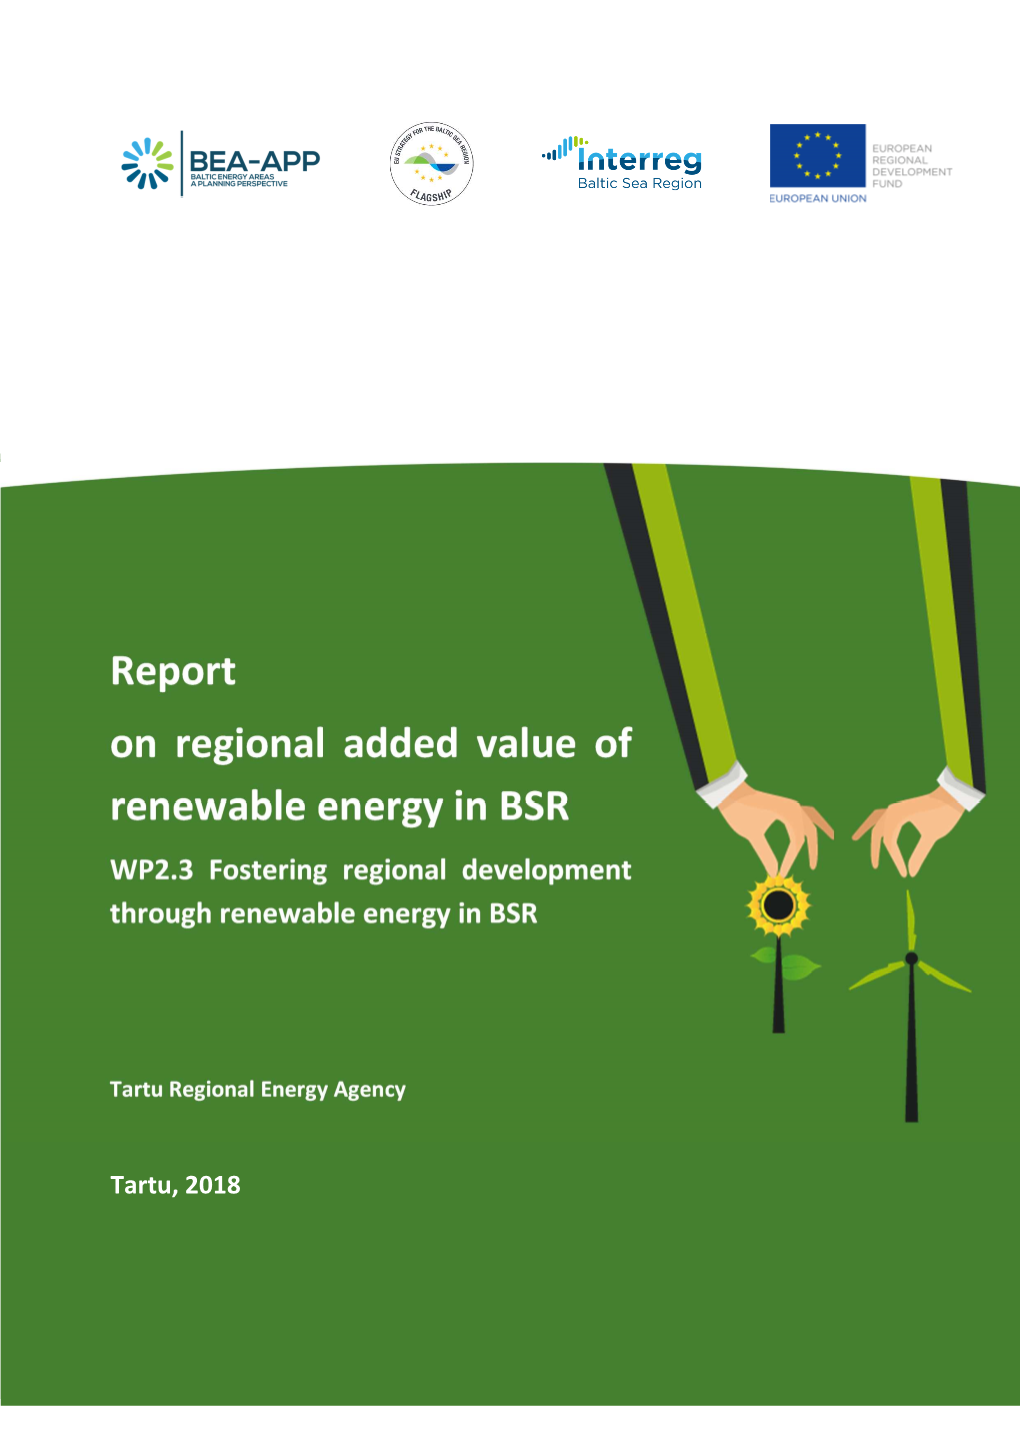 Report on Regional Added Value of Renewable Energy in BSR WP2.3 Fostering Regional Development Through Renewable Energy in BSR